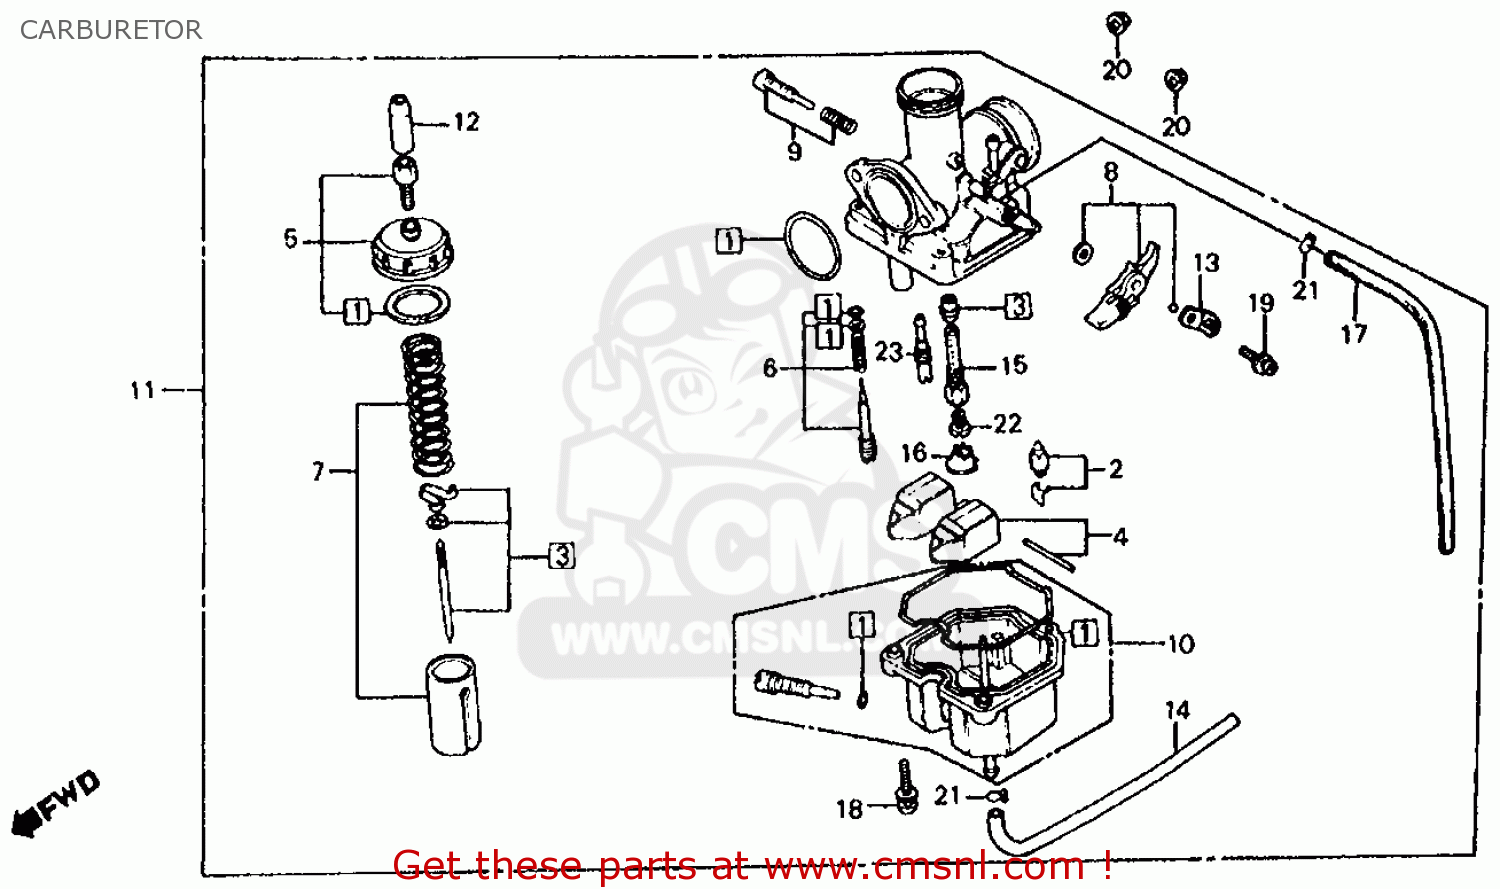 Honda ATC200 1982 (C) USA CARBURETOR - buy CARBURETOR ... ktm wiring harness 